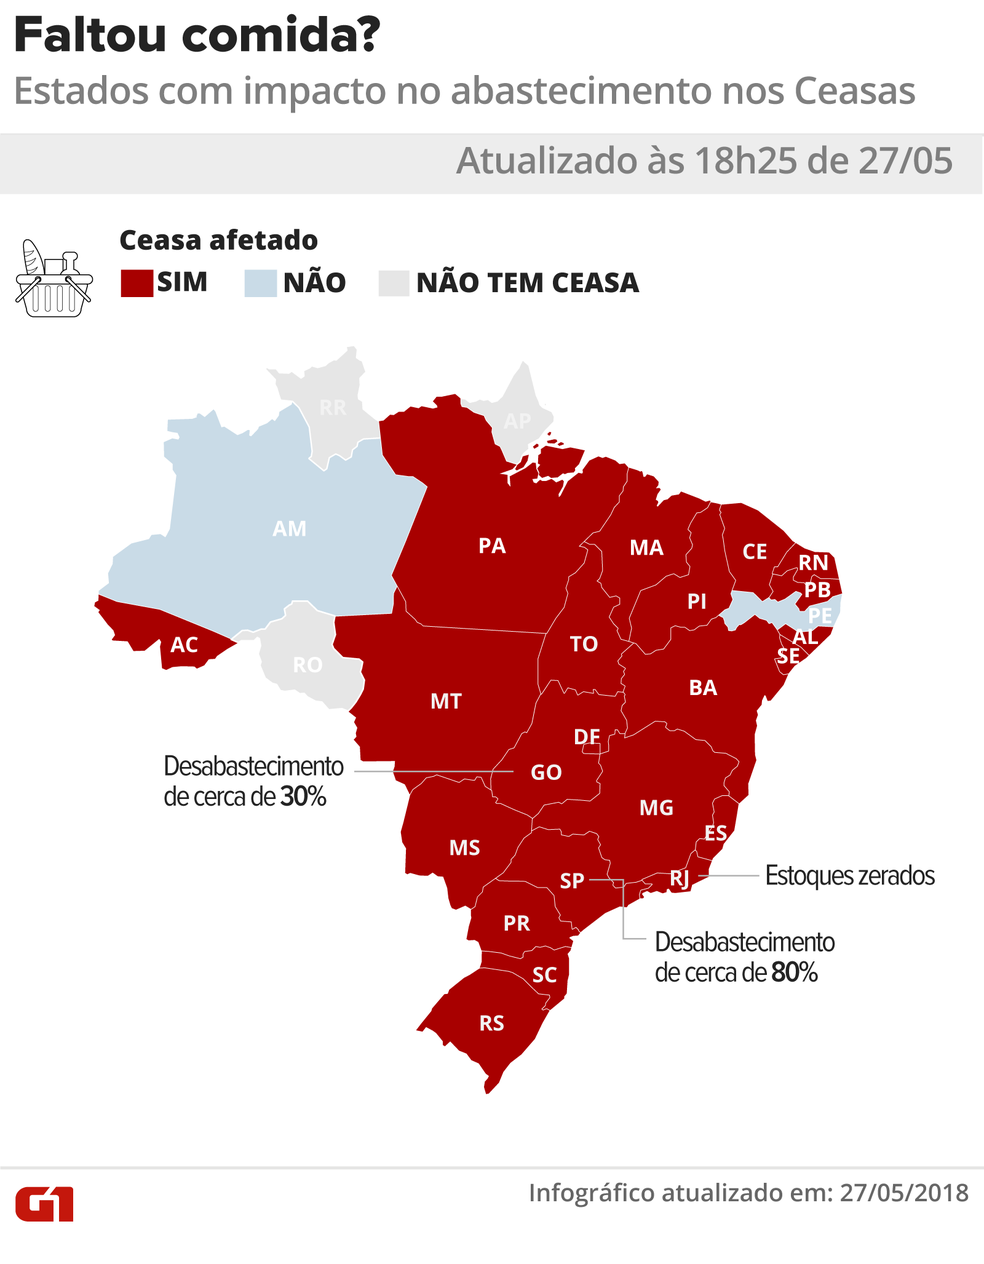 Mapa dos estados onde houve impacto no abastecimentos dos Ceasa (Foto:  Igor Estrella/G1)